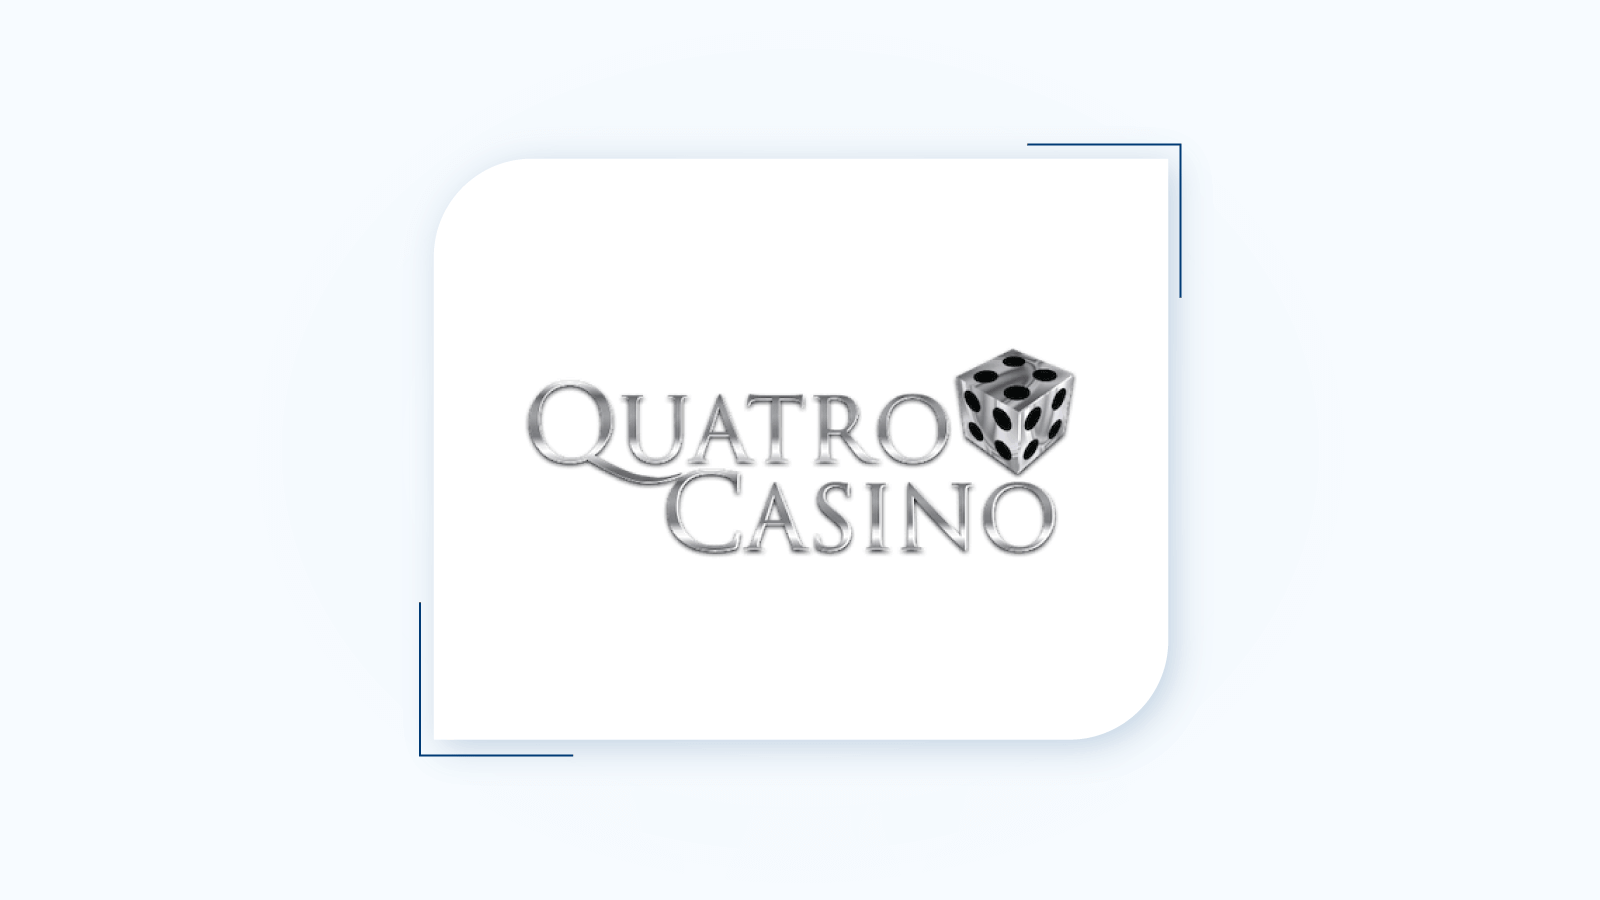 Quatro Casino - highest welcome bonus match from Casino Rewards